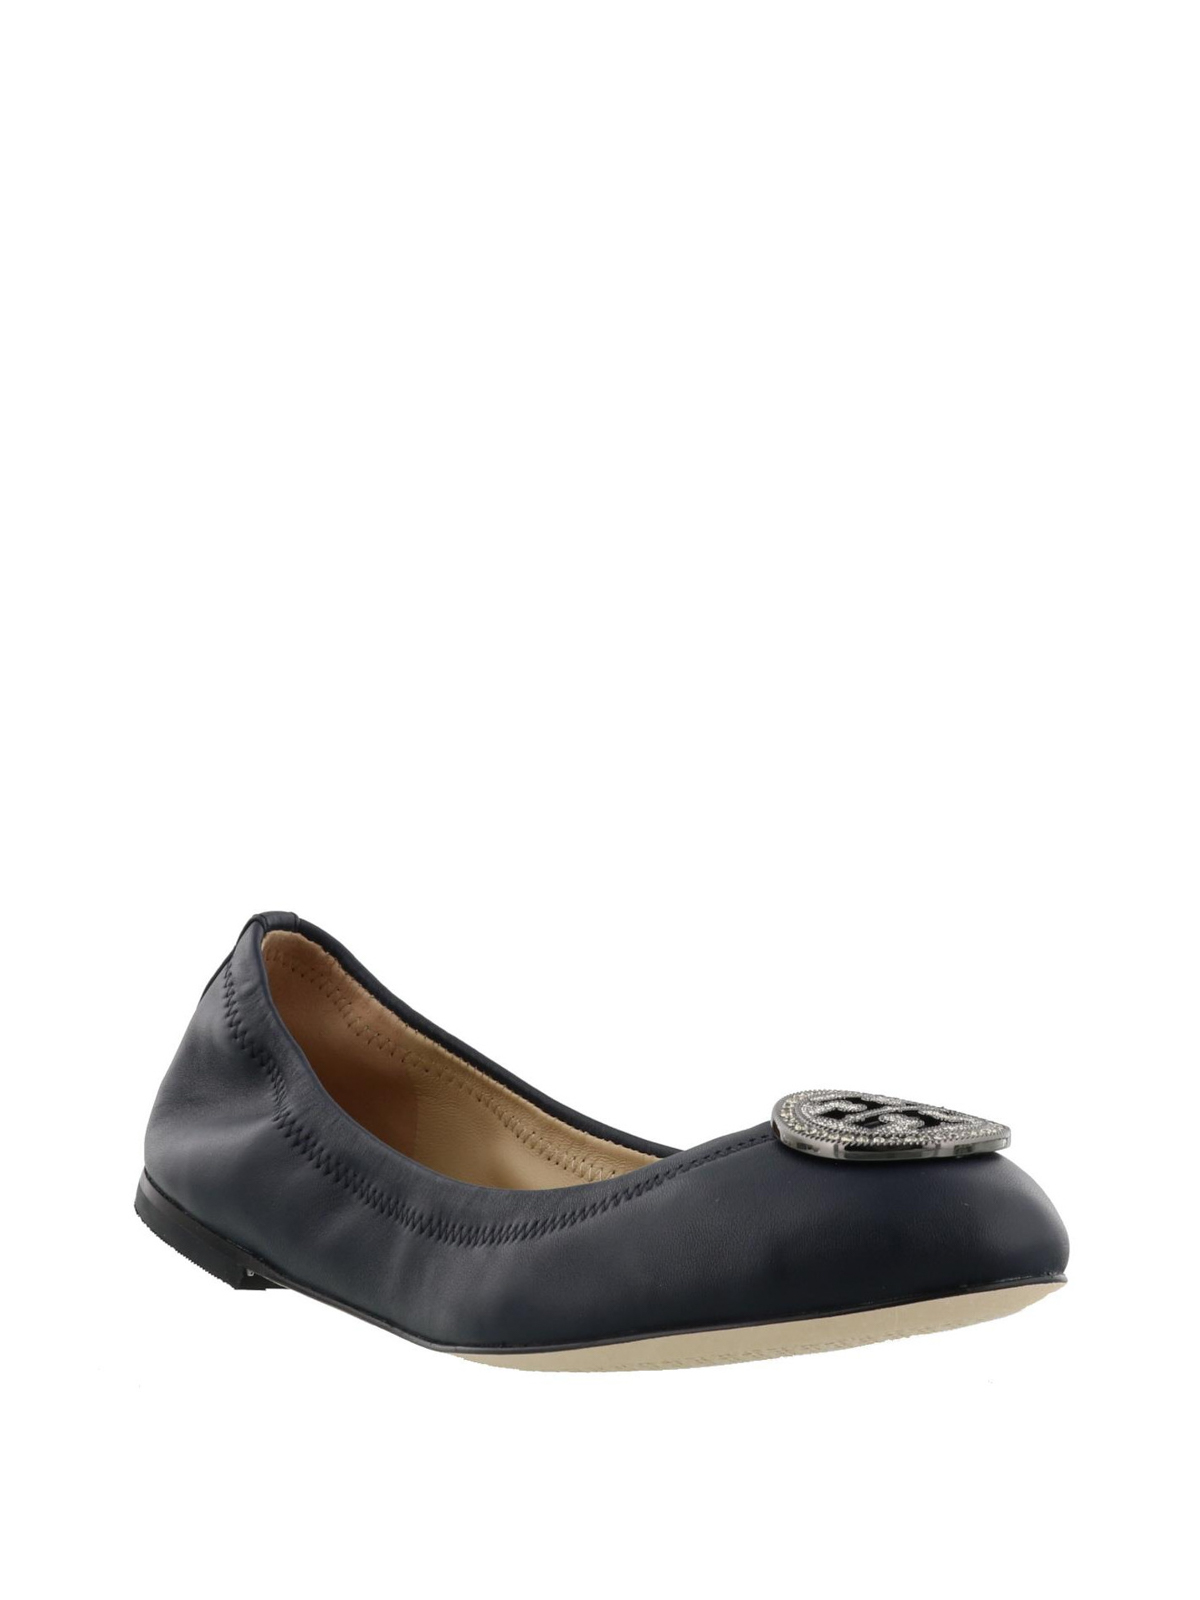 Flat shoes Tory Burch - Liana navy leather flat shoes - 46084403